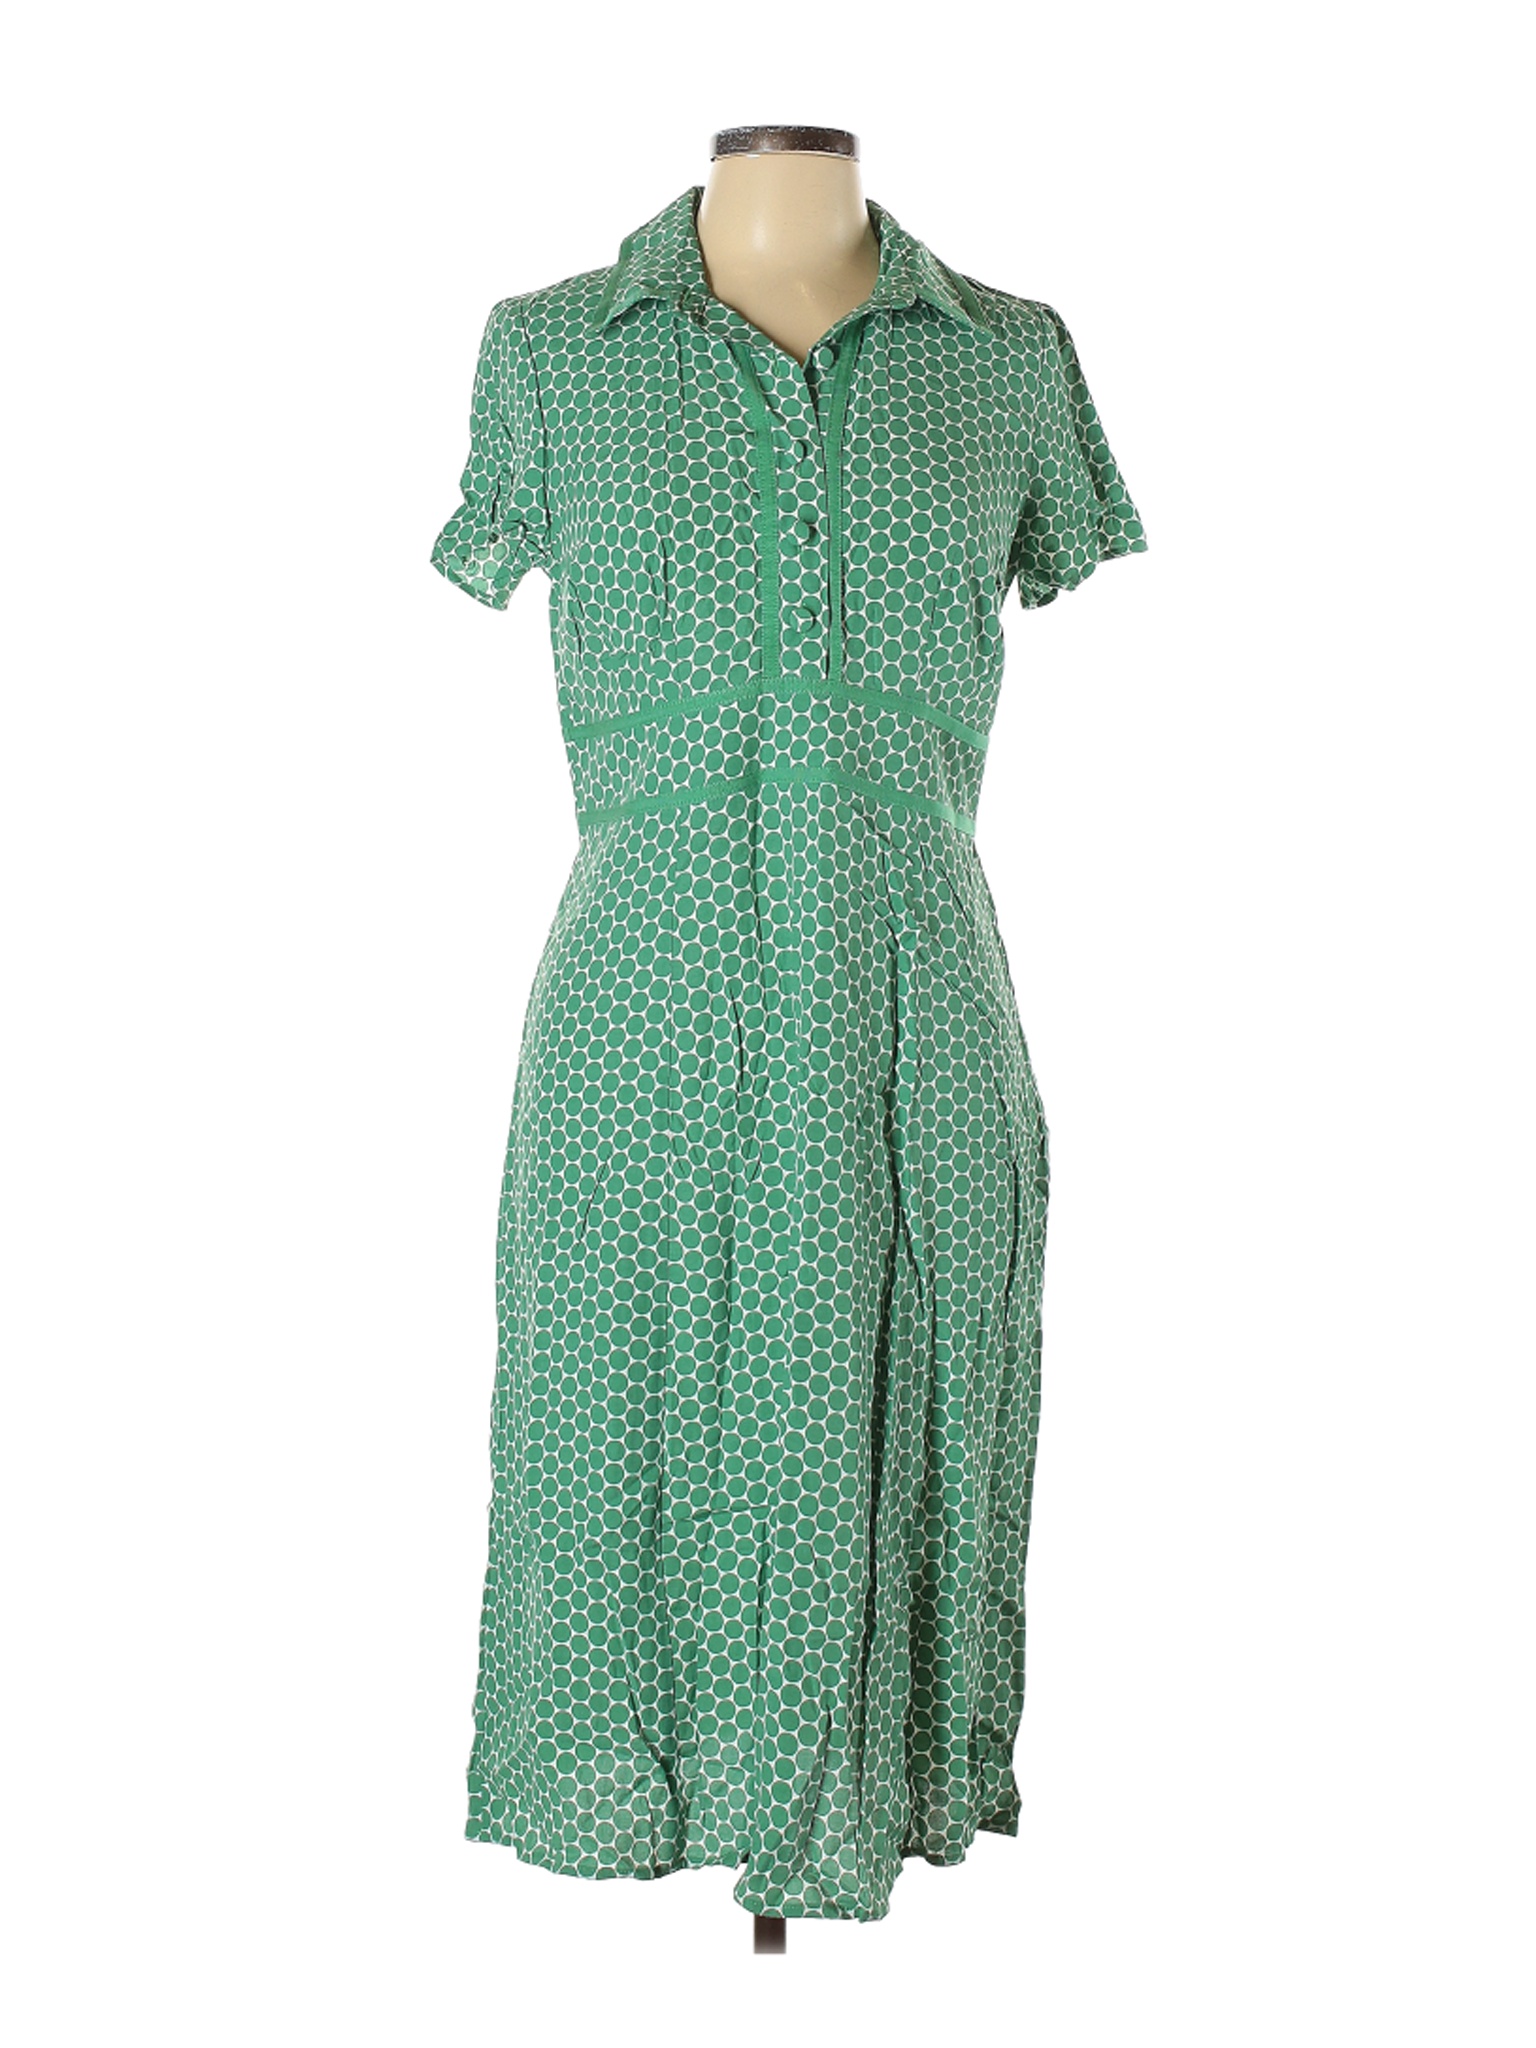 Boden Women Green Casual Dress 12 | eBay